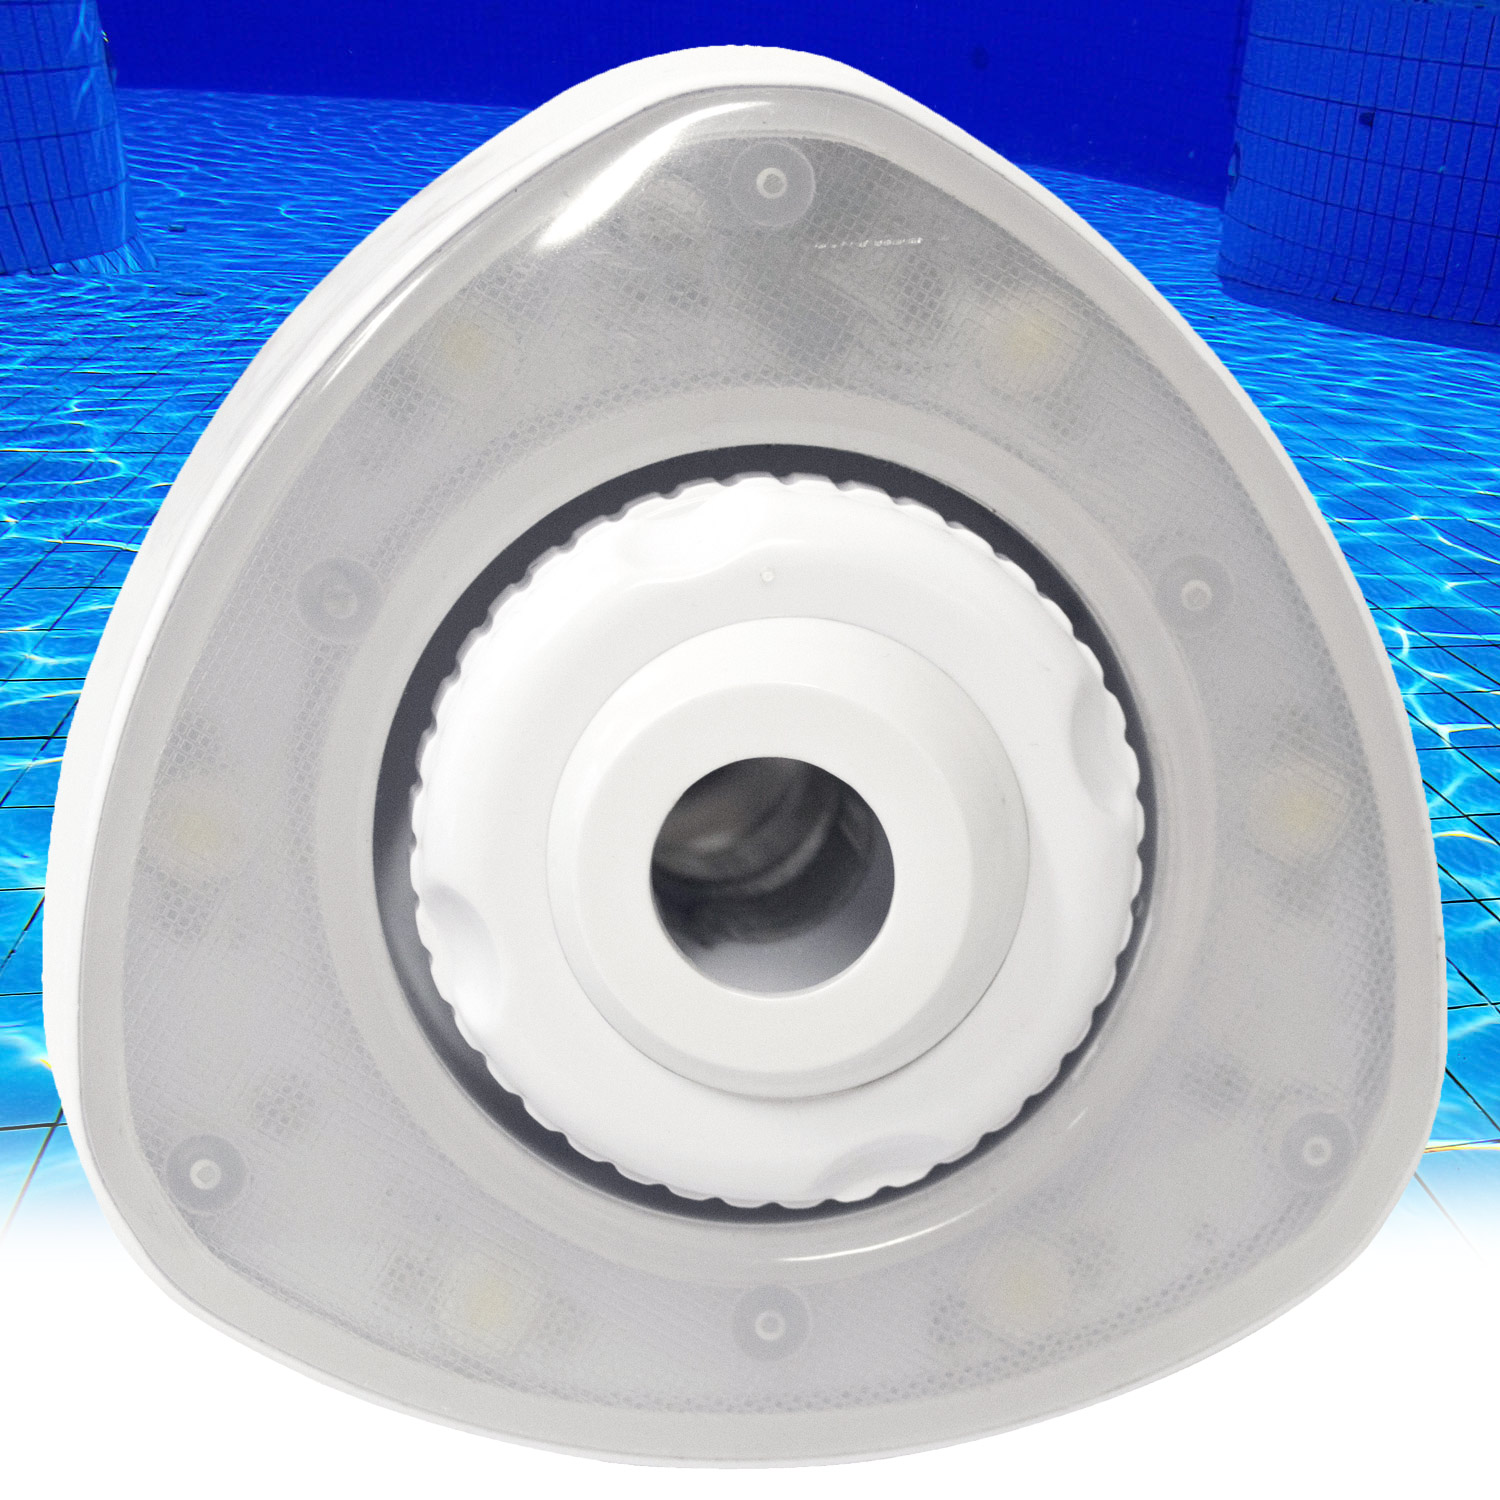 Jet Light Einlaufdüse LED Beleuchtung Pool Schwimmbad Düsenkopf Stahlwandpool